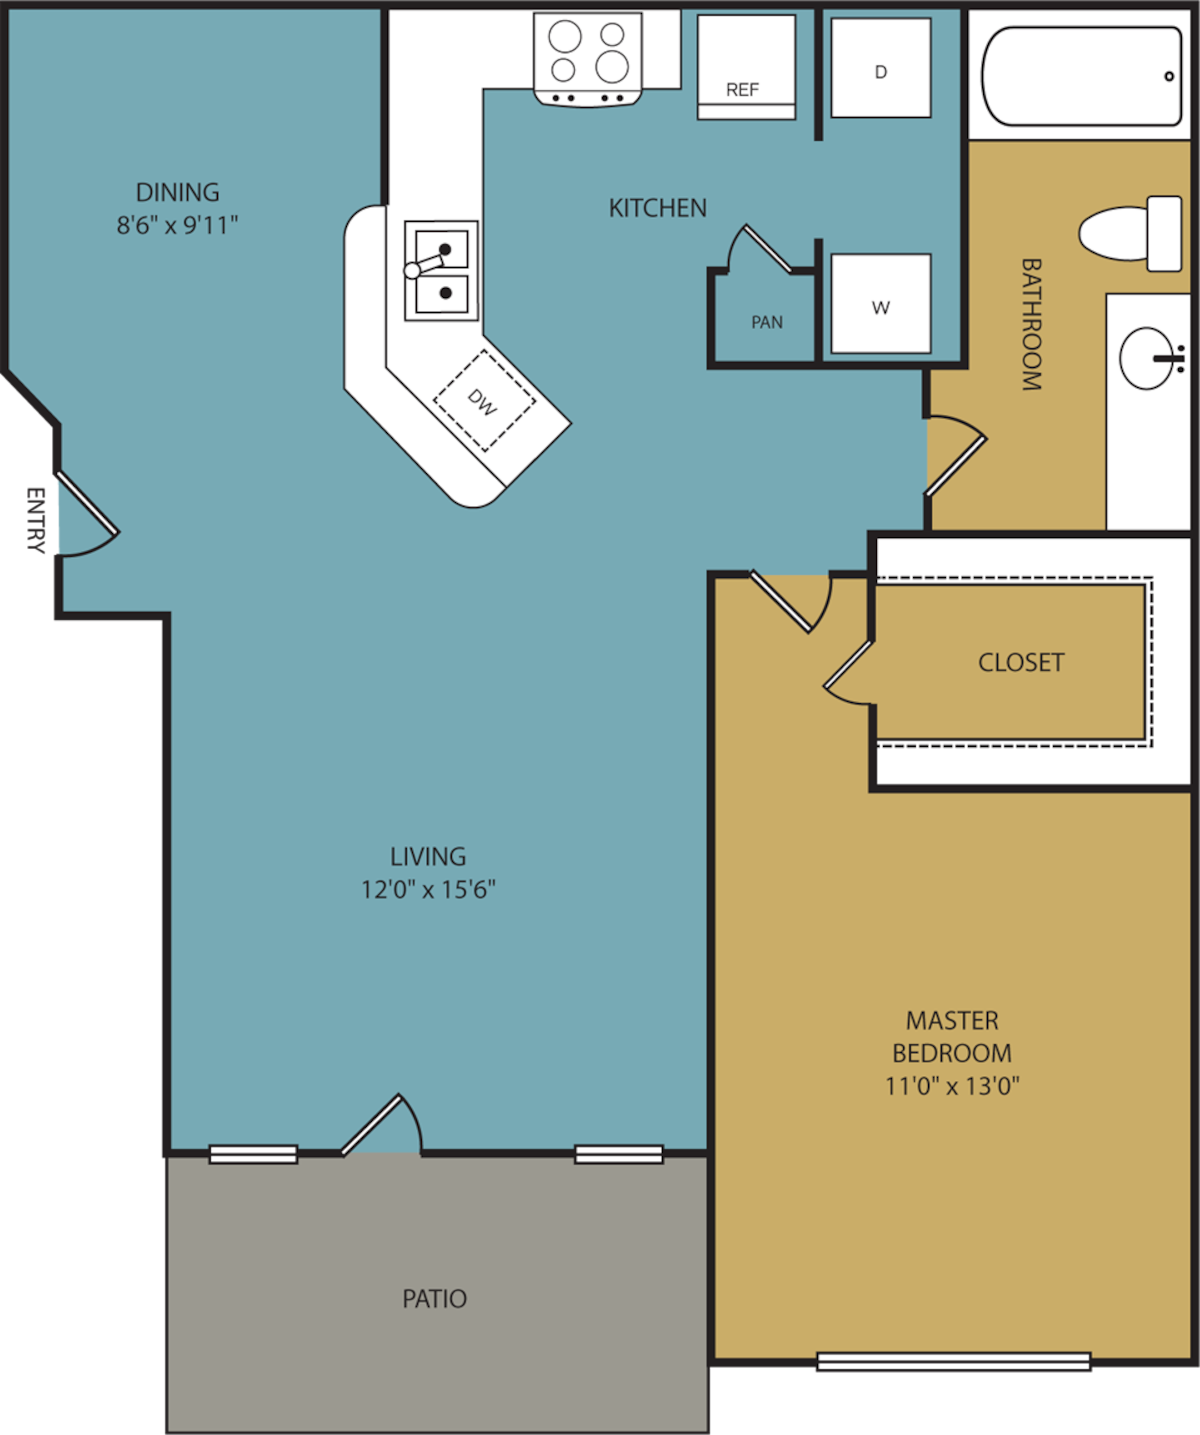 Floorplan diagram for Waldorf - A3, showing 1 bedroom